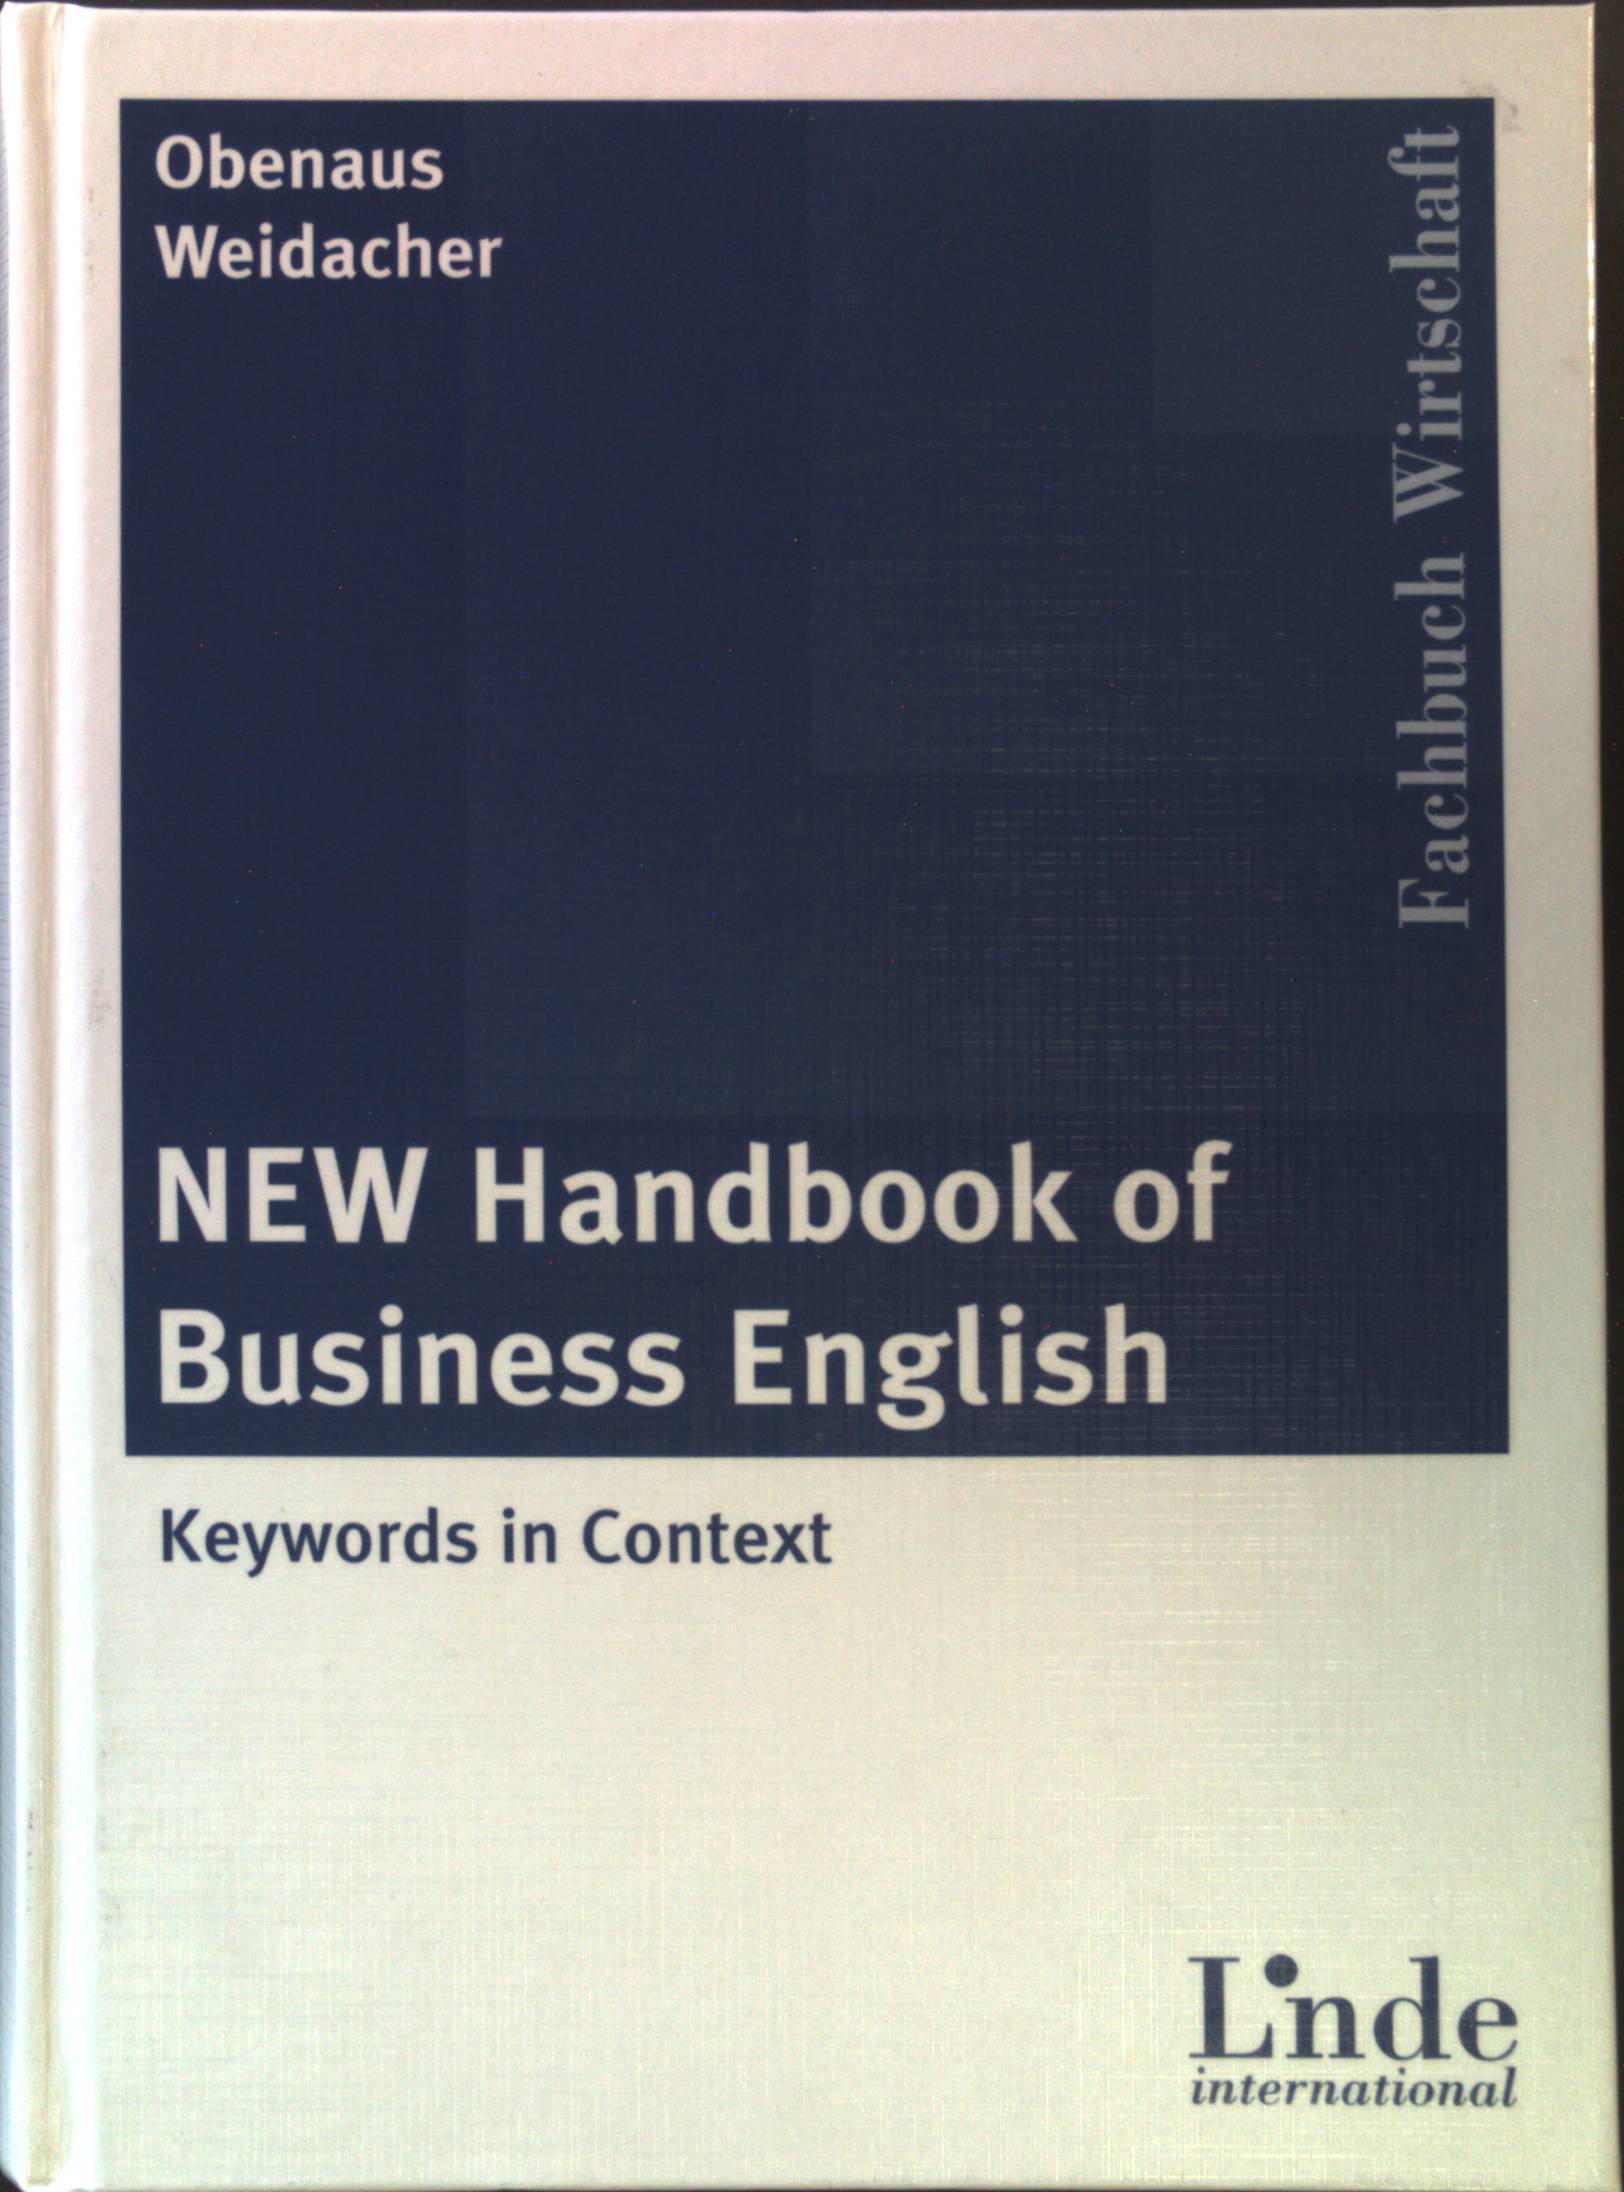 New Handbook of Business English: Keywords in Context  Auflage: 1., - Obenaus, Wolfgang and Josef Weidacher